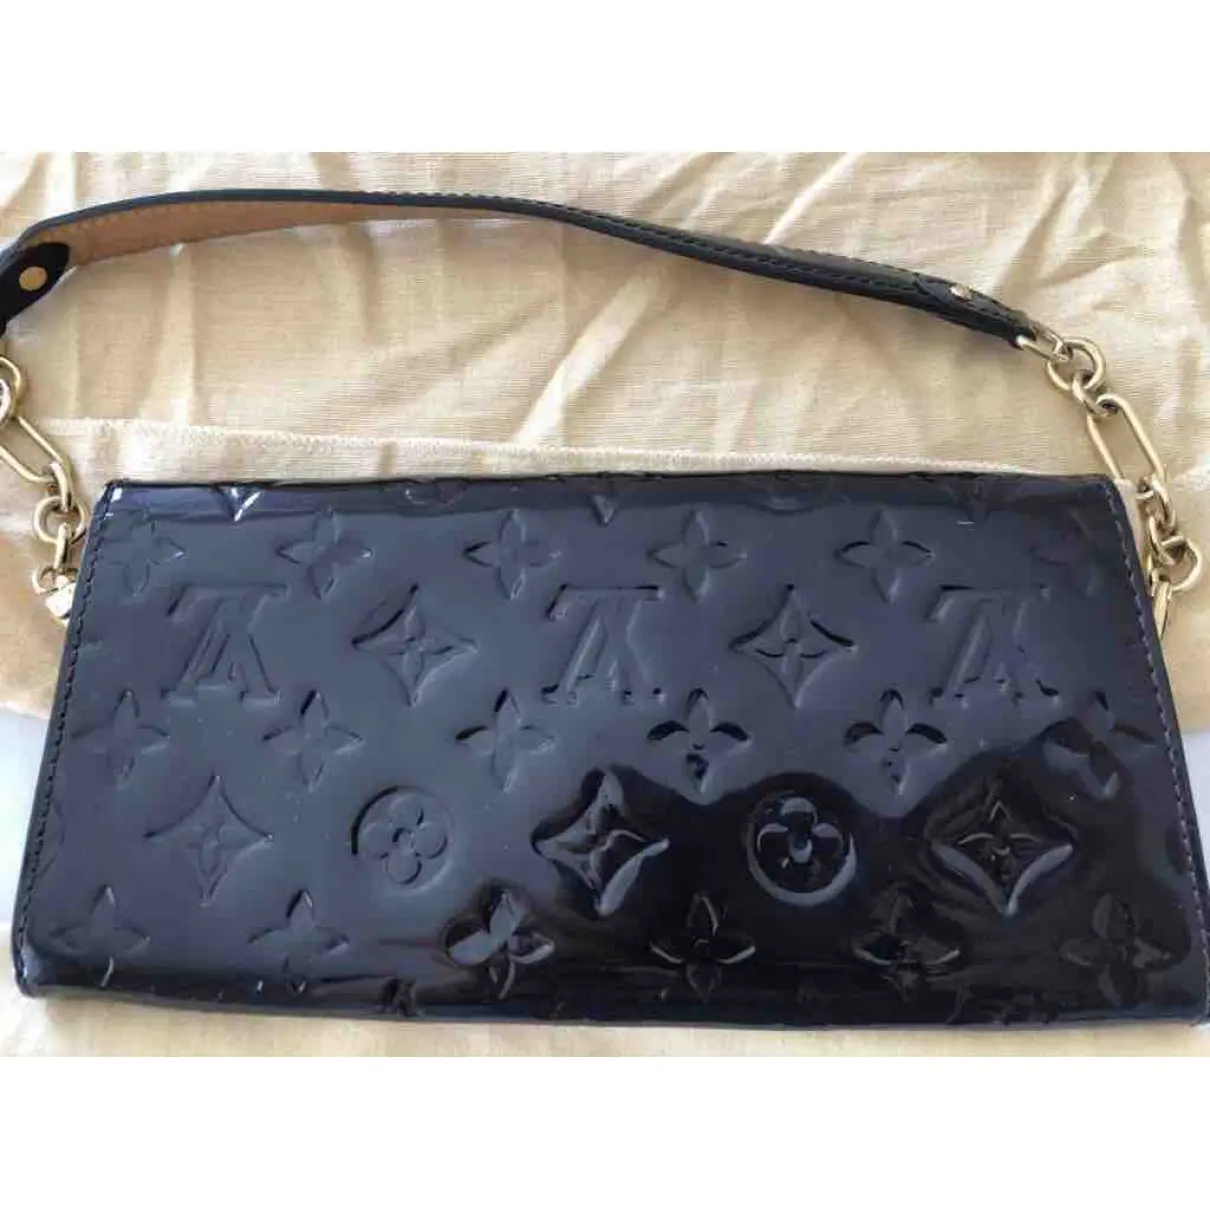 Buy Louis Vuitton Sunset Boulevard patent leather handbag online